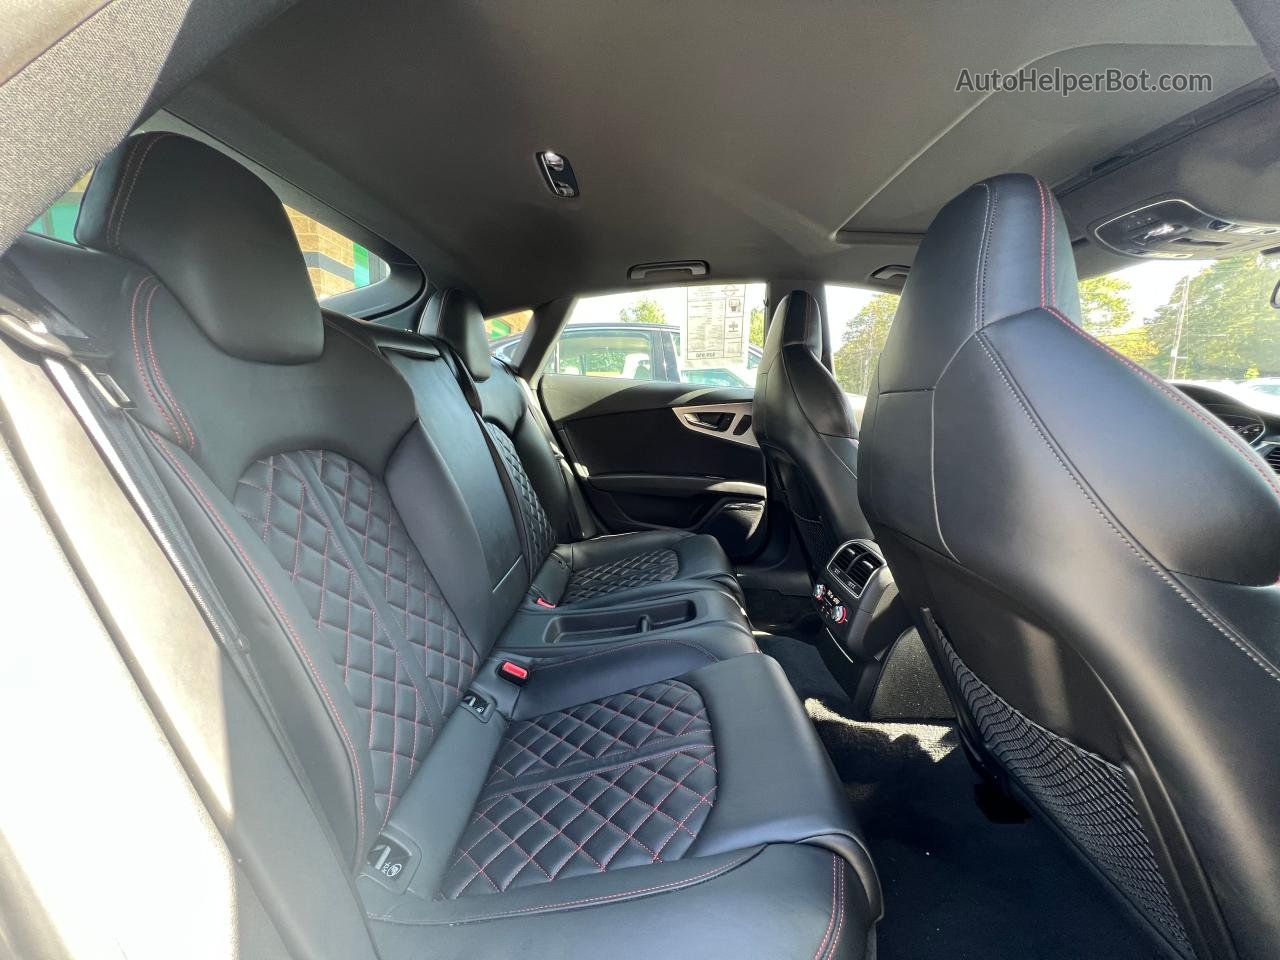 2018 Audi A7 Premium Plus Gray vin: WAUW3AFC7JN064725